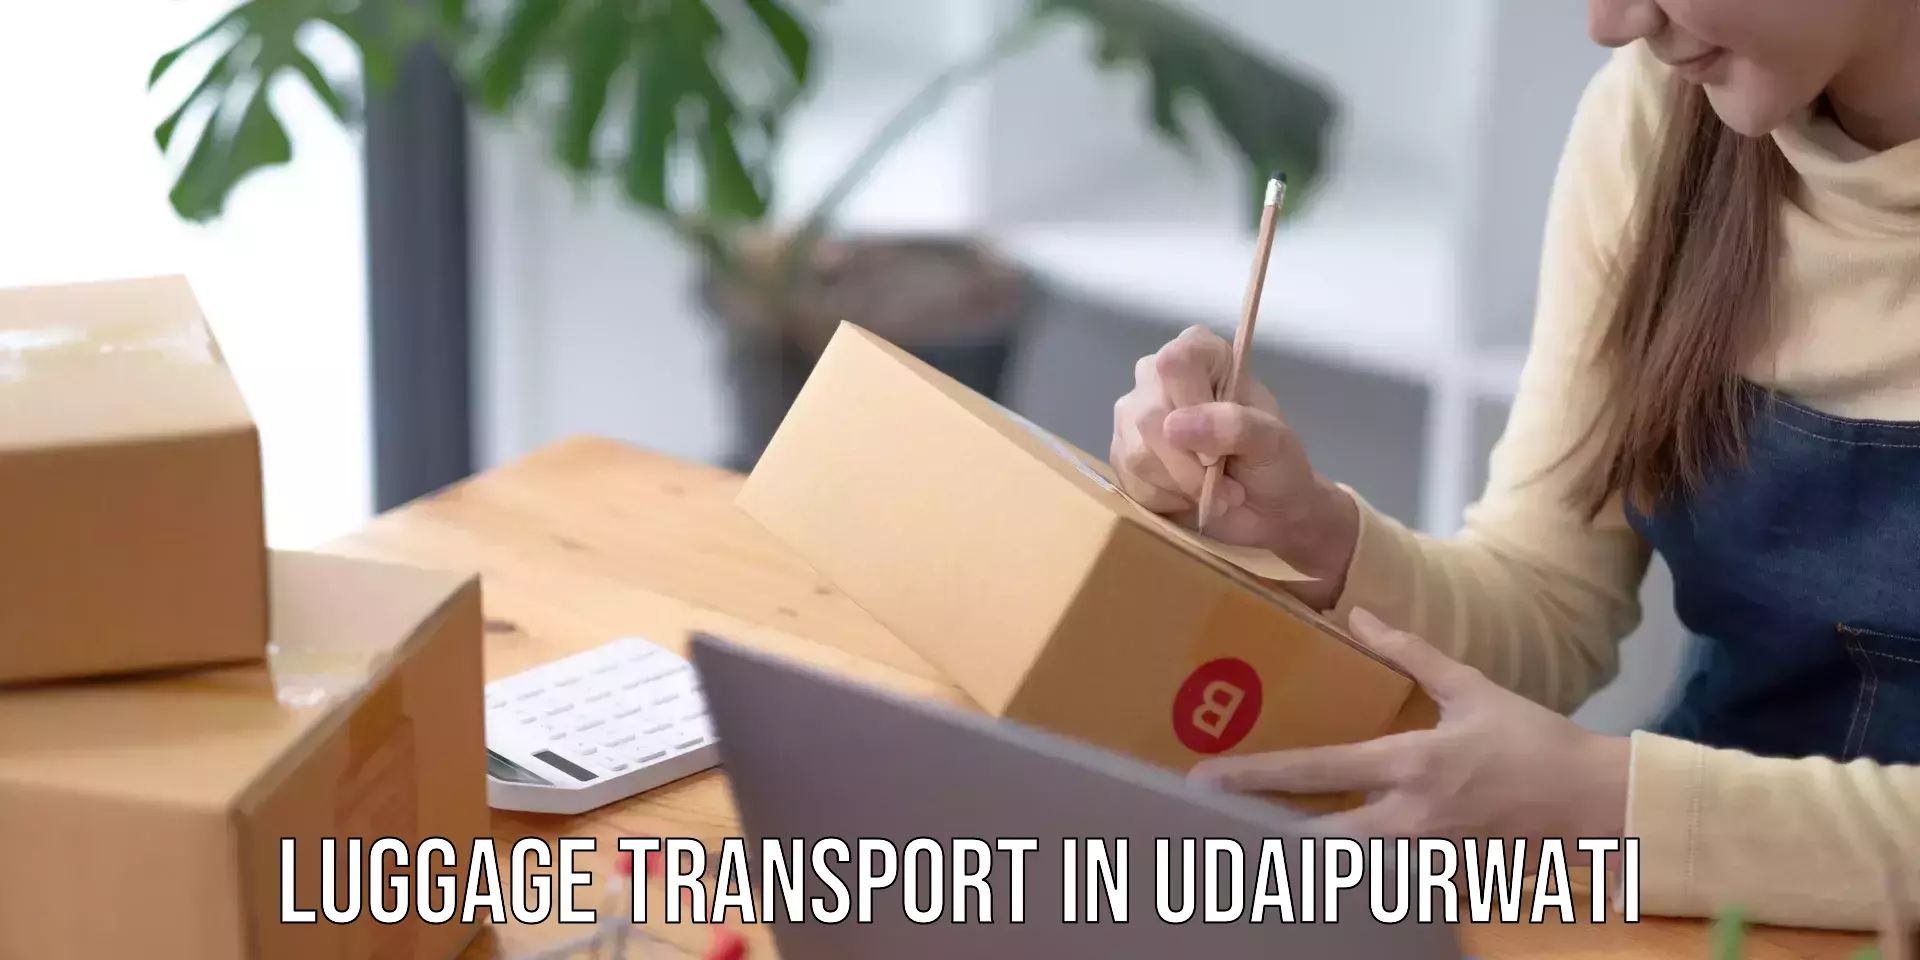 Urgent luggage shipment in Udaipurwati